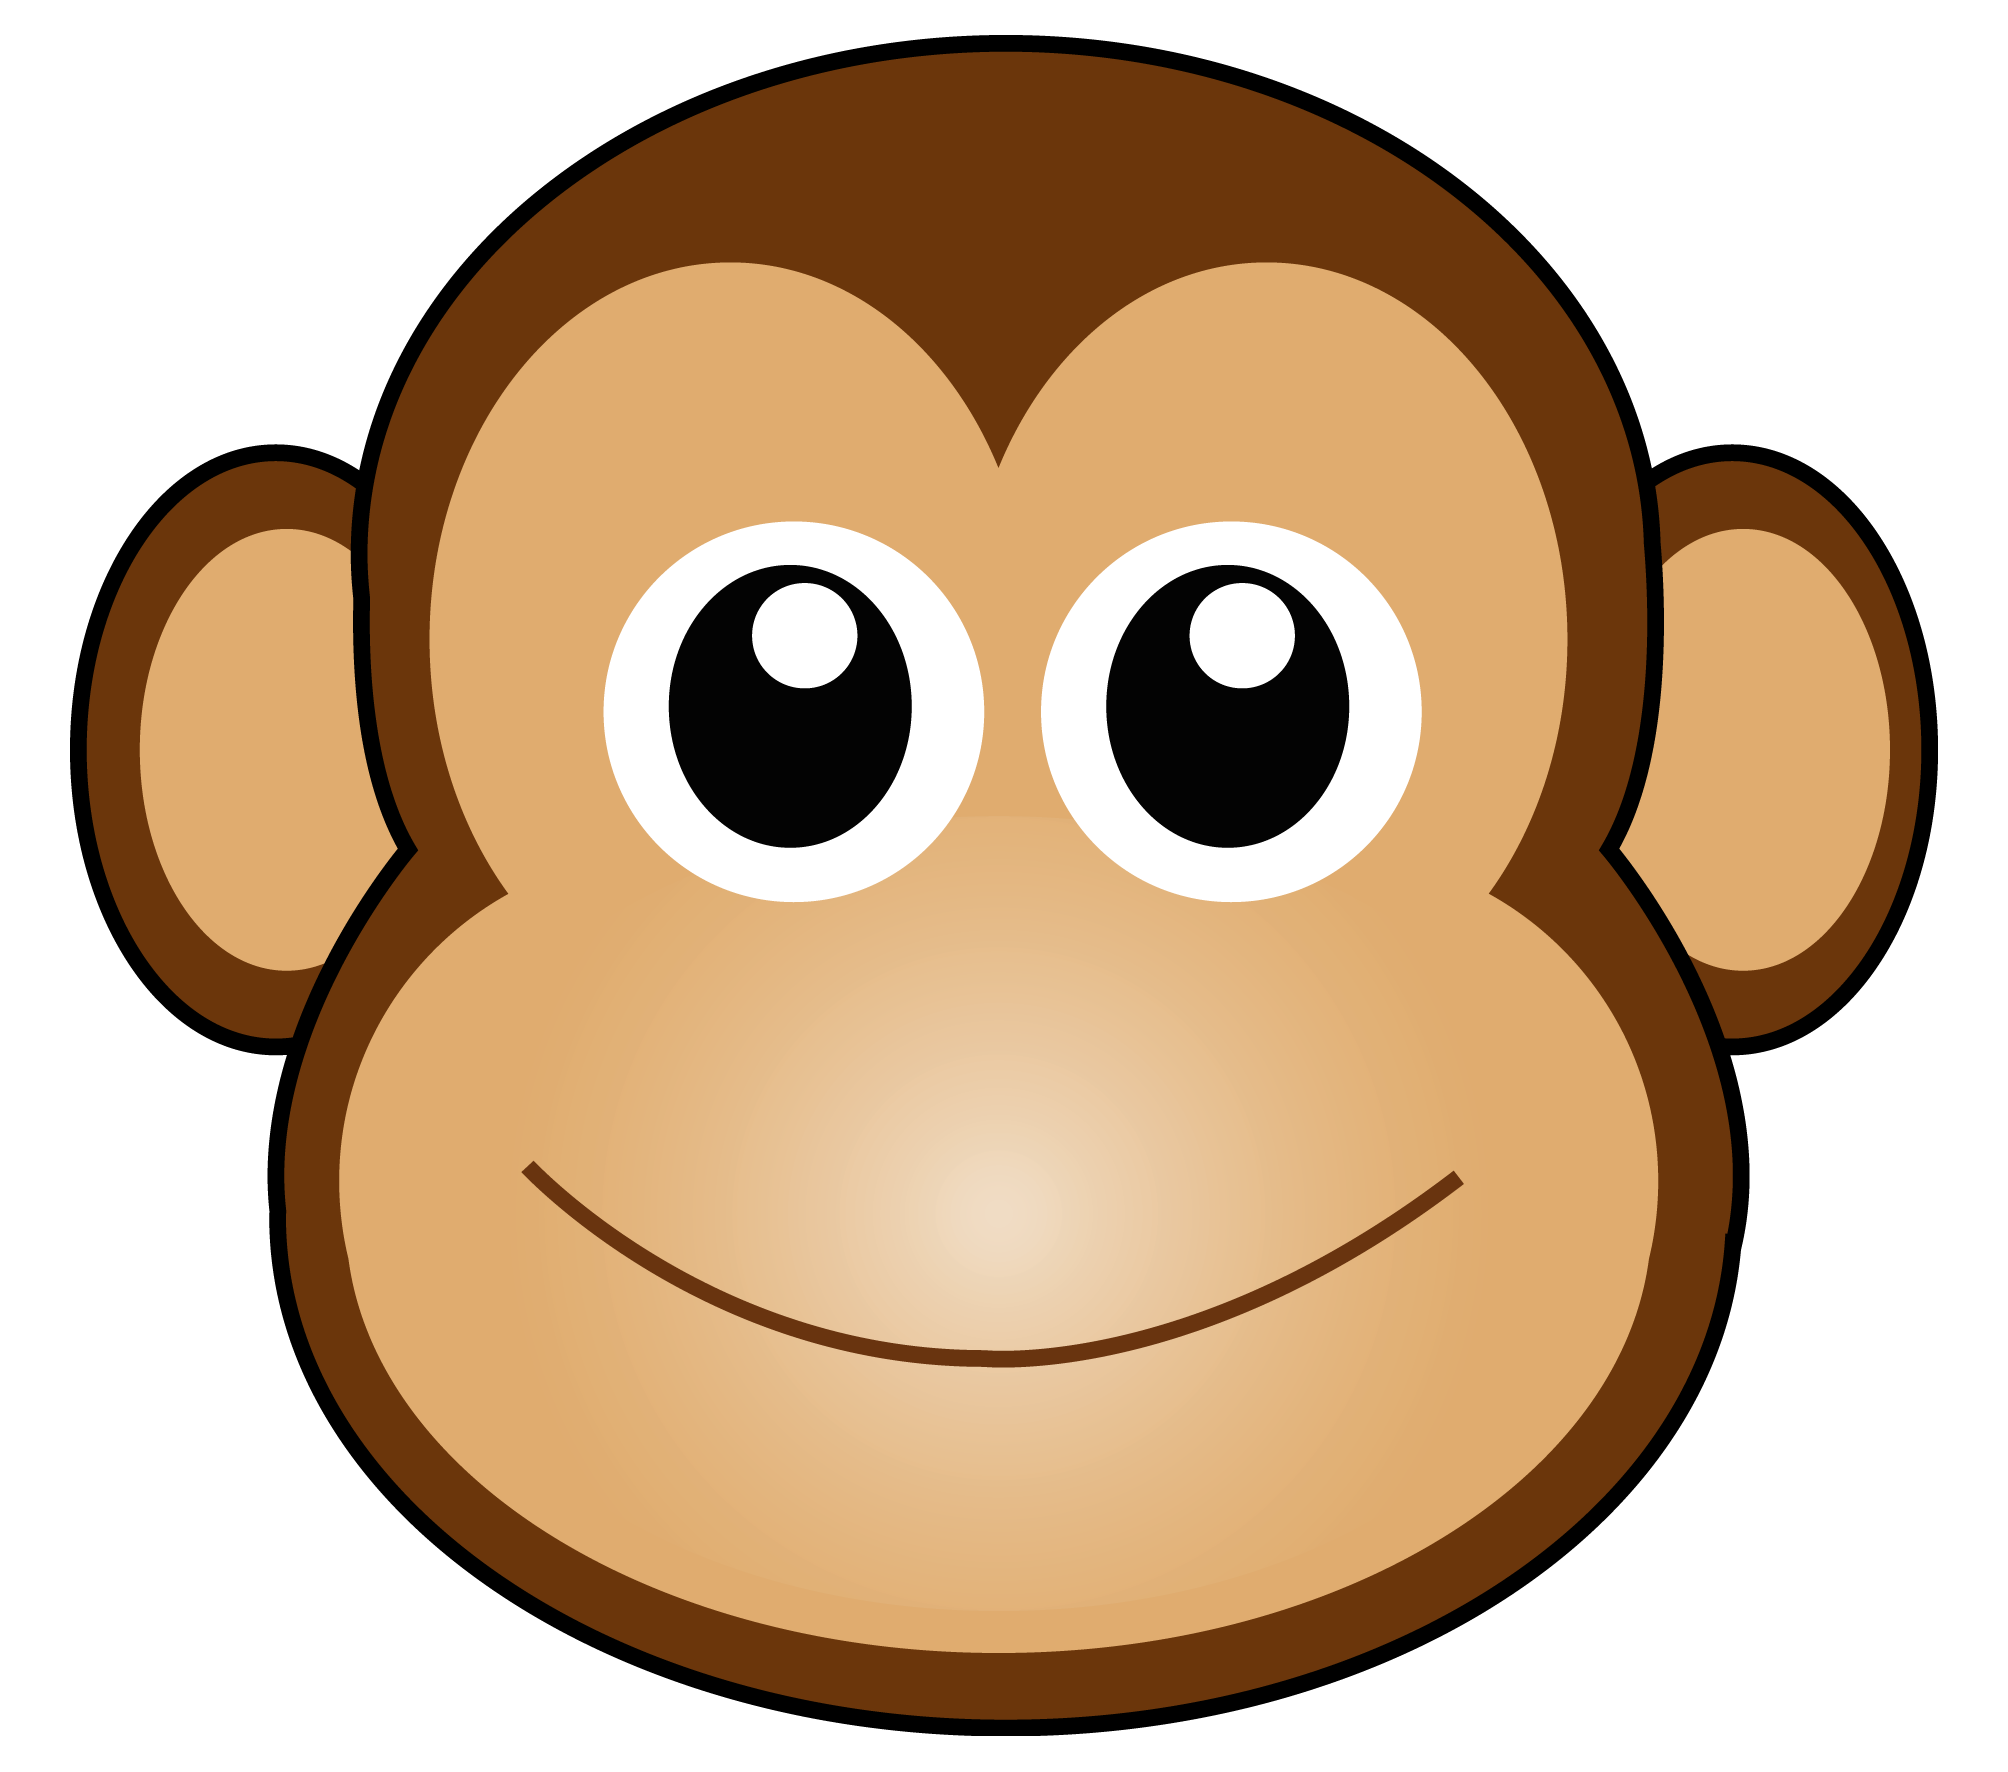 Monyet | Free Images at Clker.com - vector clip art online, royalty